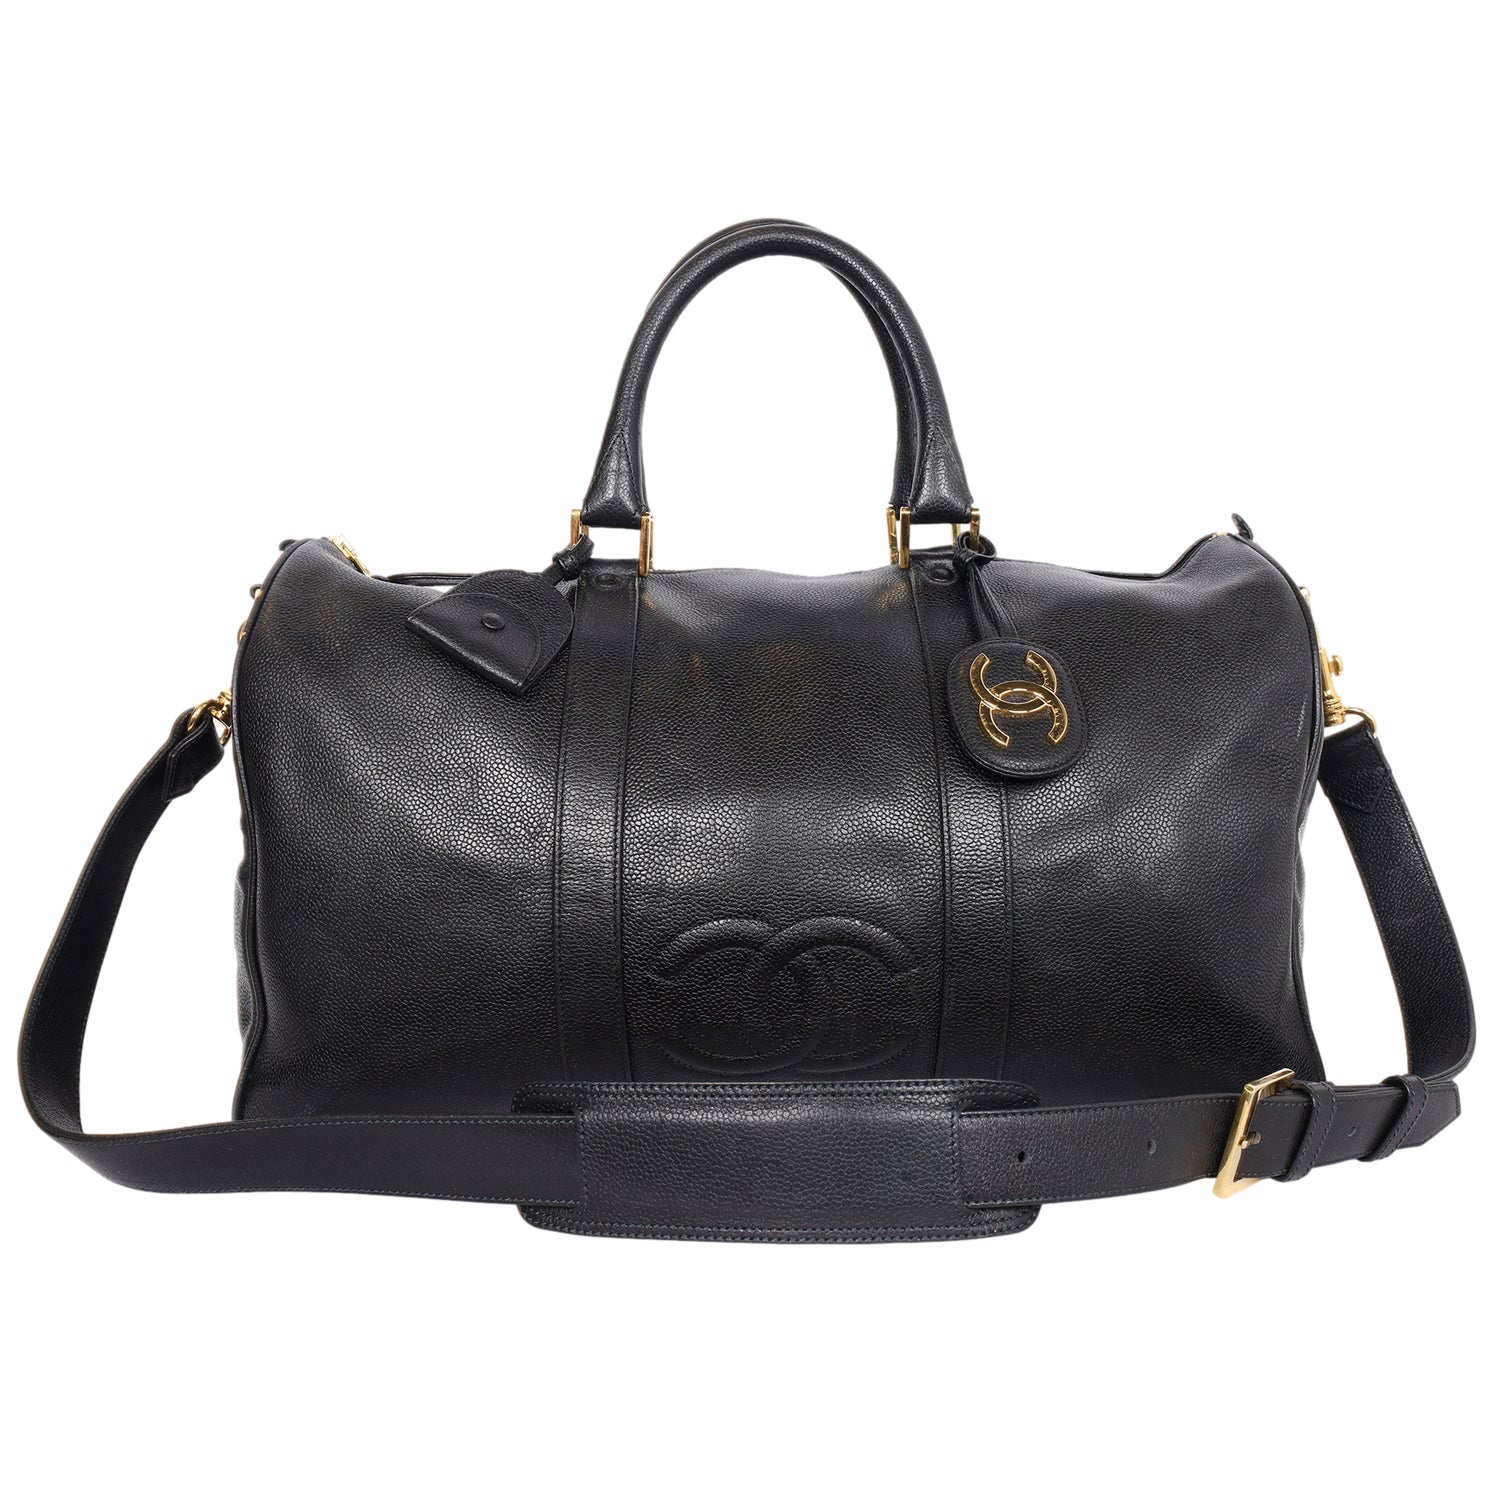 Chanel Black Leather CC Boston Bag Chanel